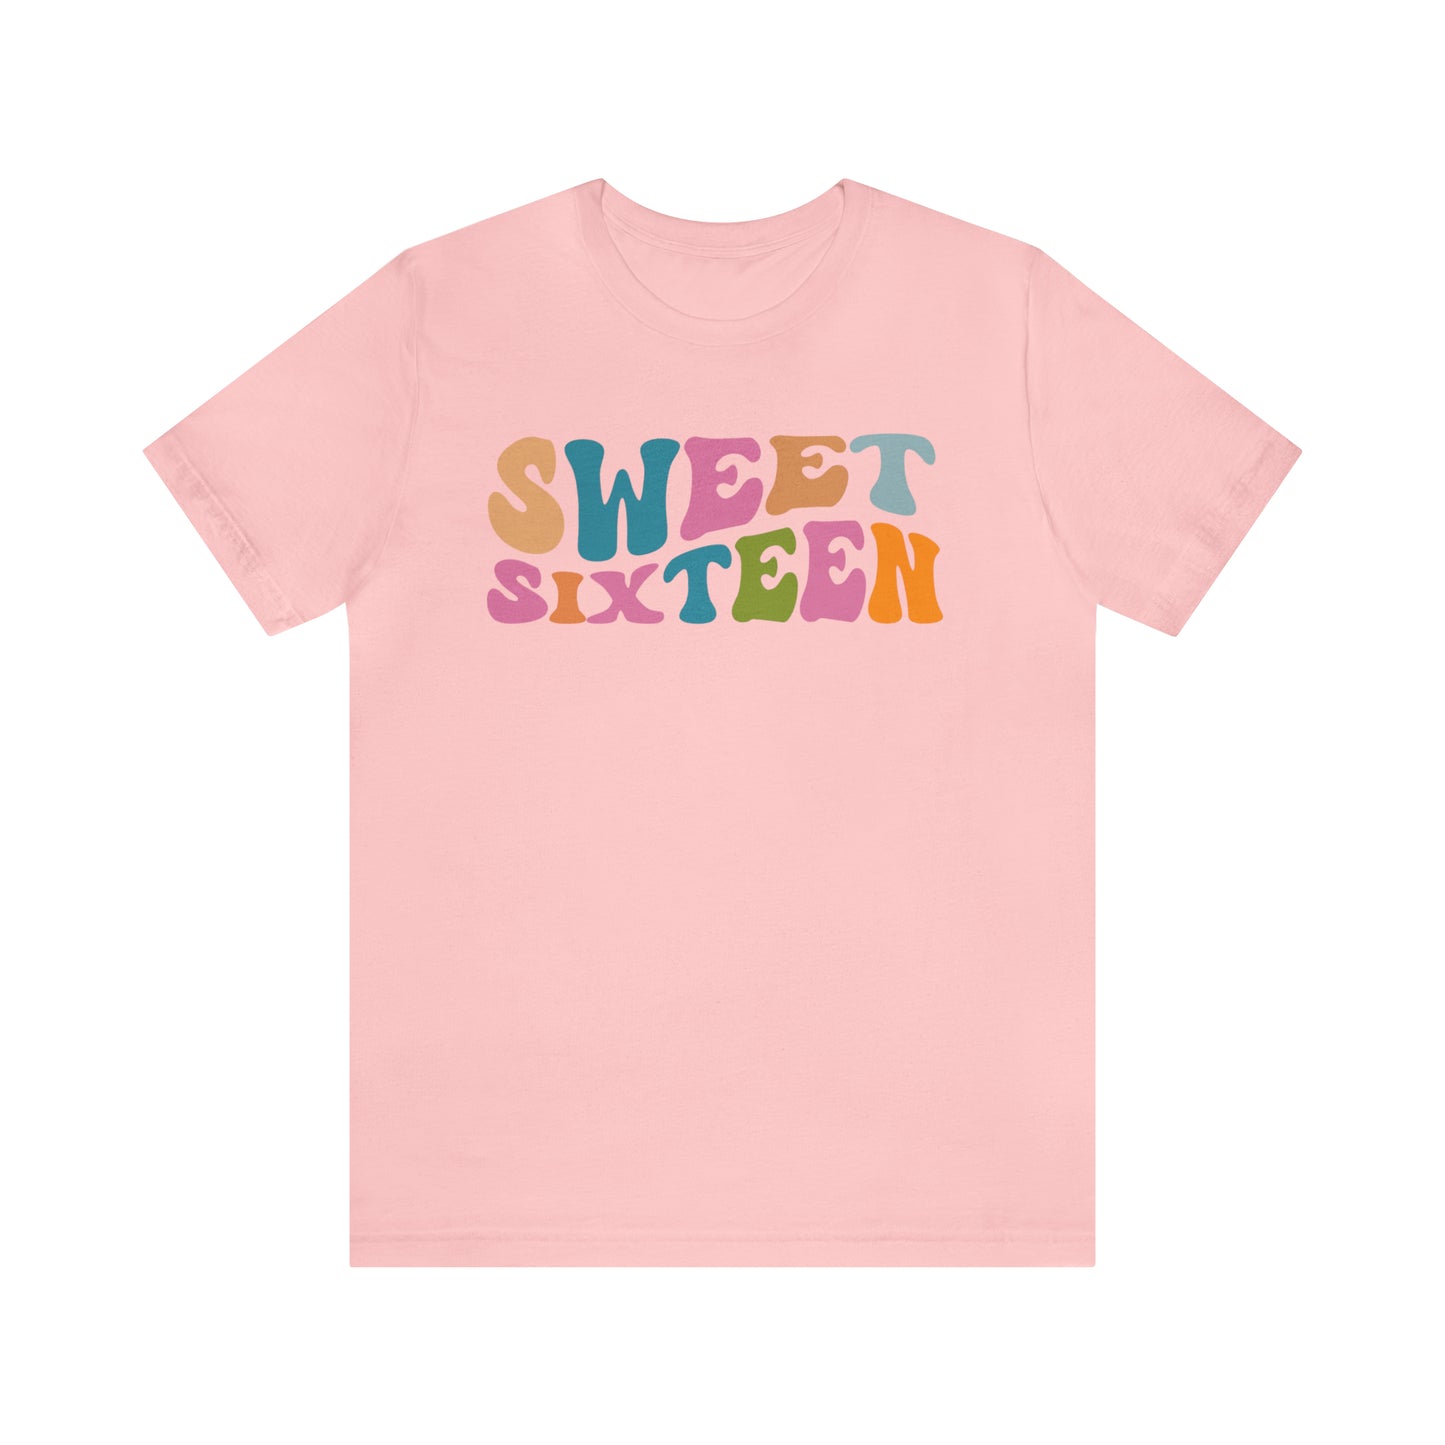 Sixteenth Birthday Gift, Sweet Sixteen Shirt for 16th Birthday Party, Cute Sweet 16 Gift for 16th Birthday TShirt for Daughter, T476